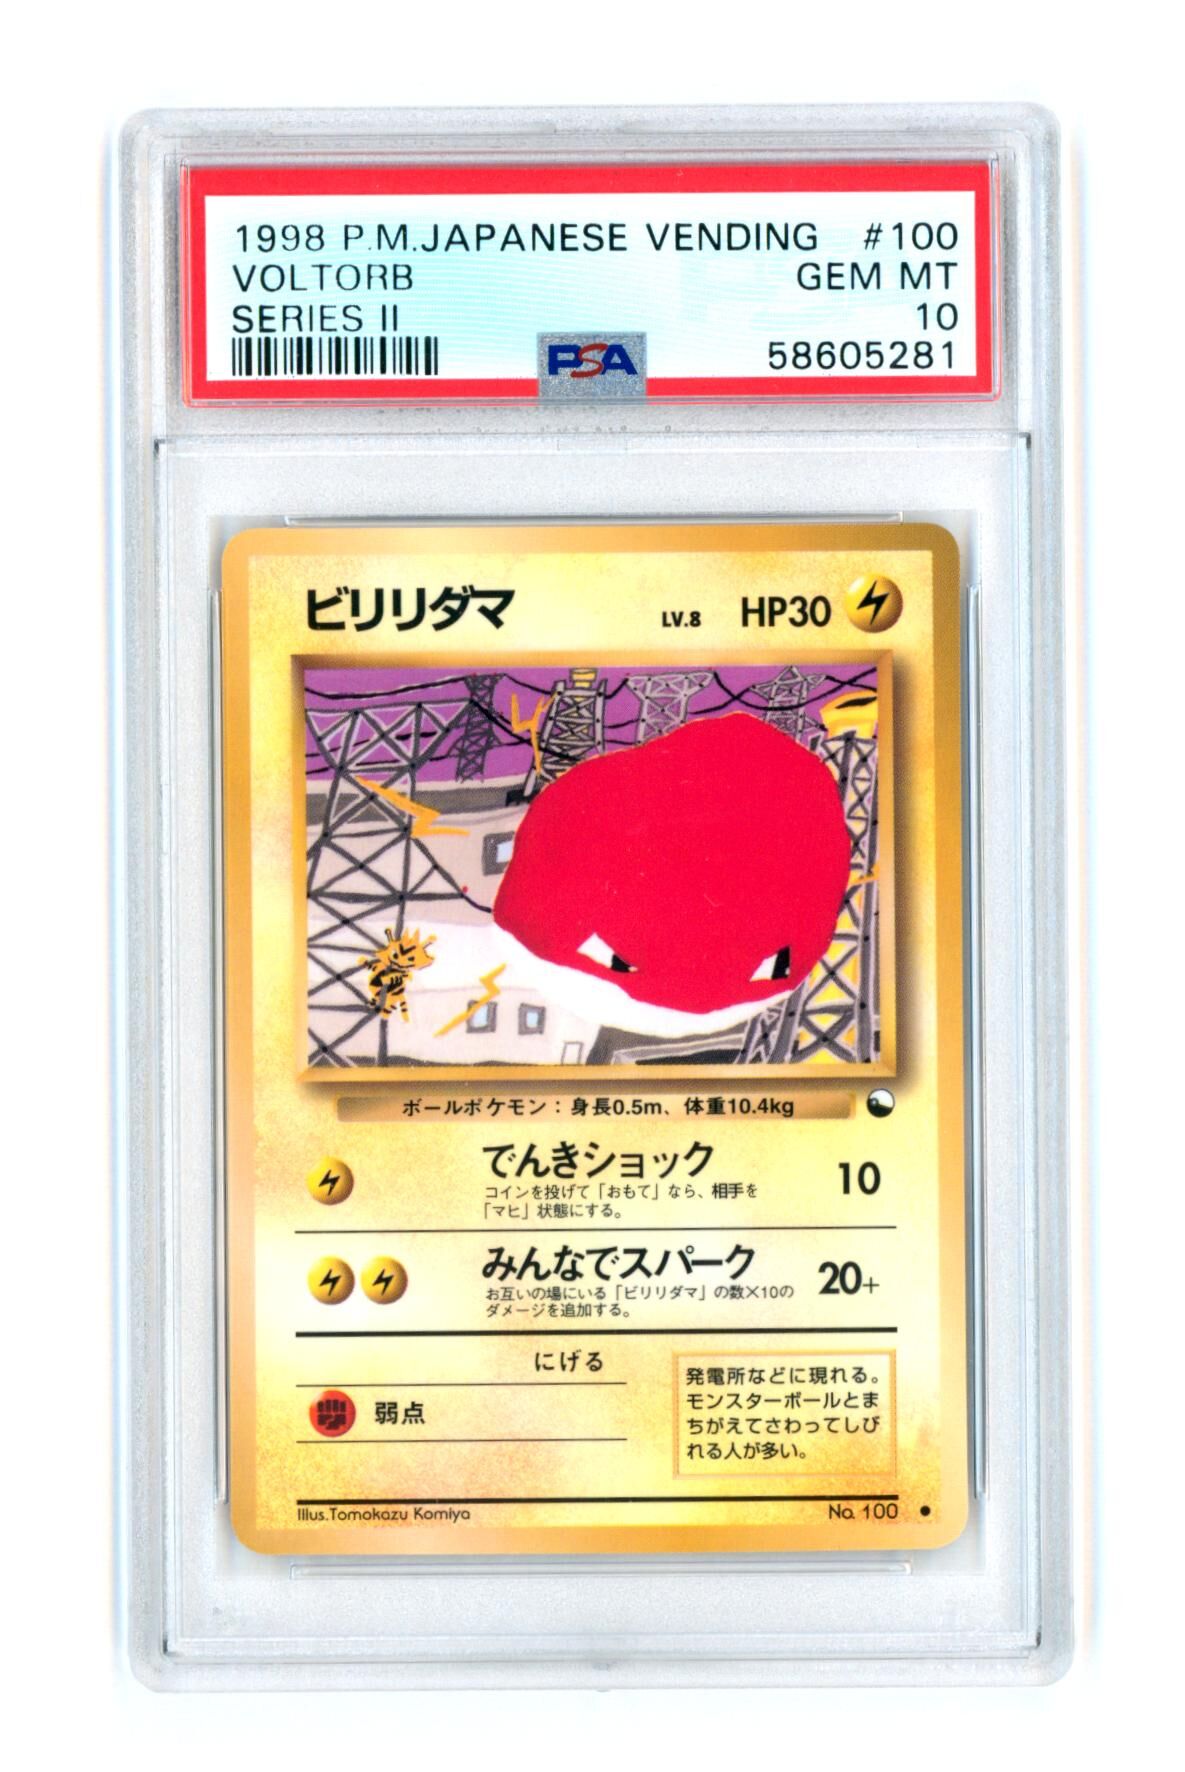 Voltorb #100 - Series 2 - Japanese Vending - PSA 10 GEM MT - Pokémon